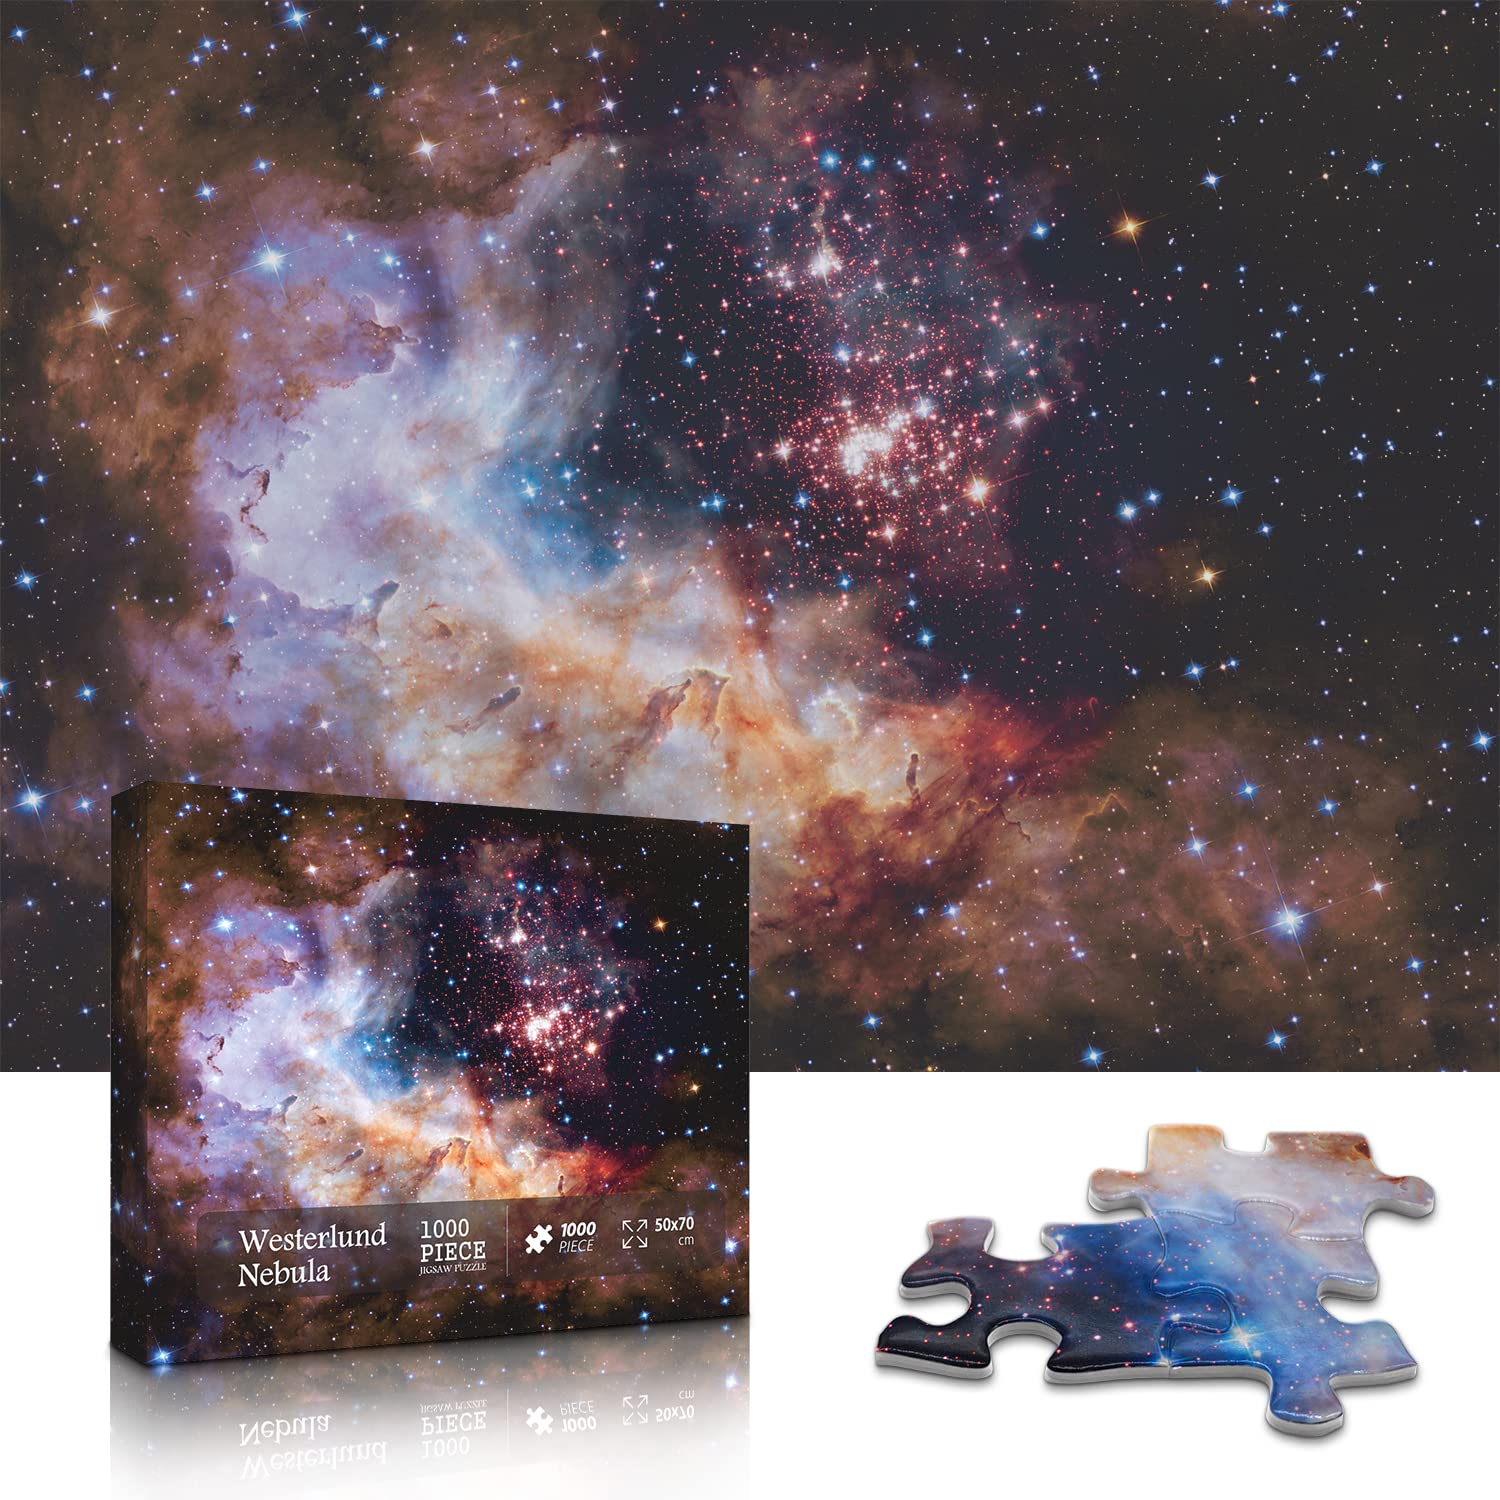 Pickforu® Galaxie-Sonnensystem-Puzzle 1000 Teile